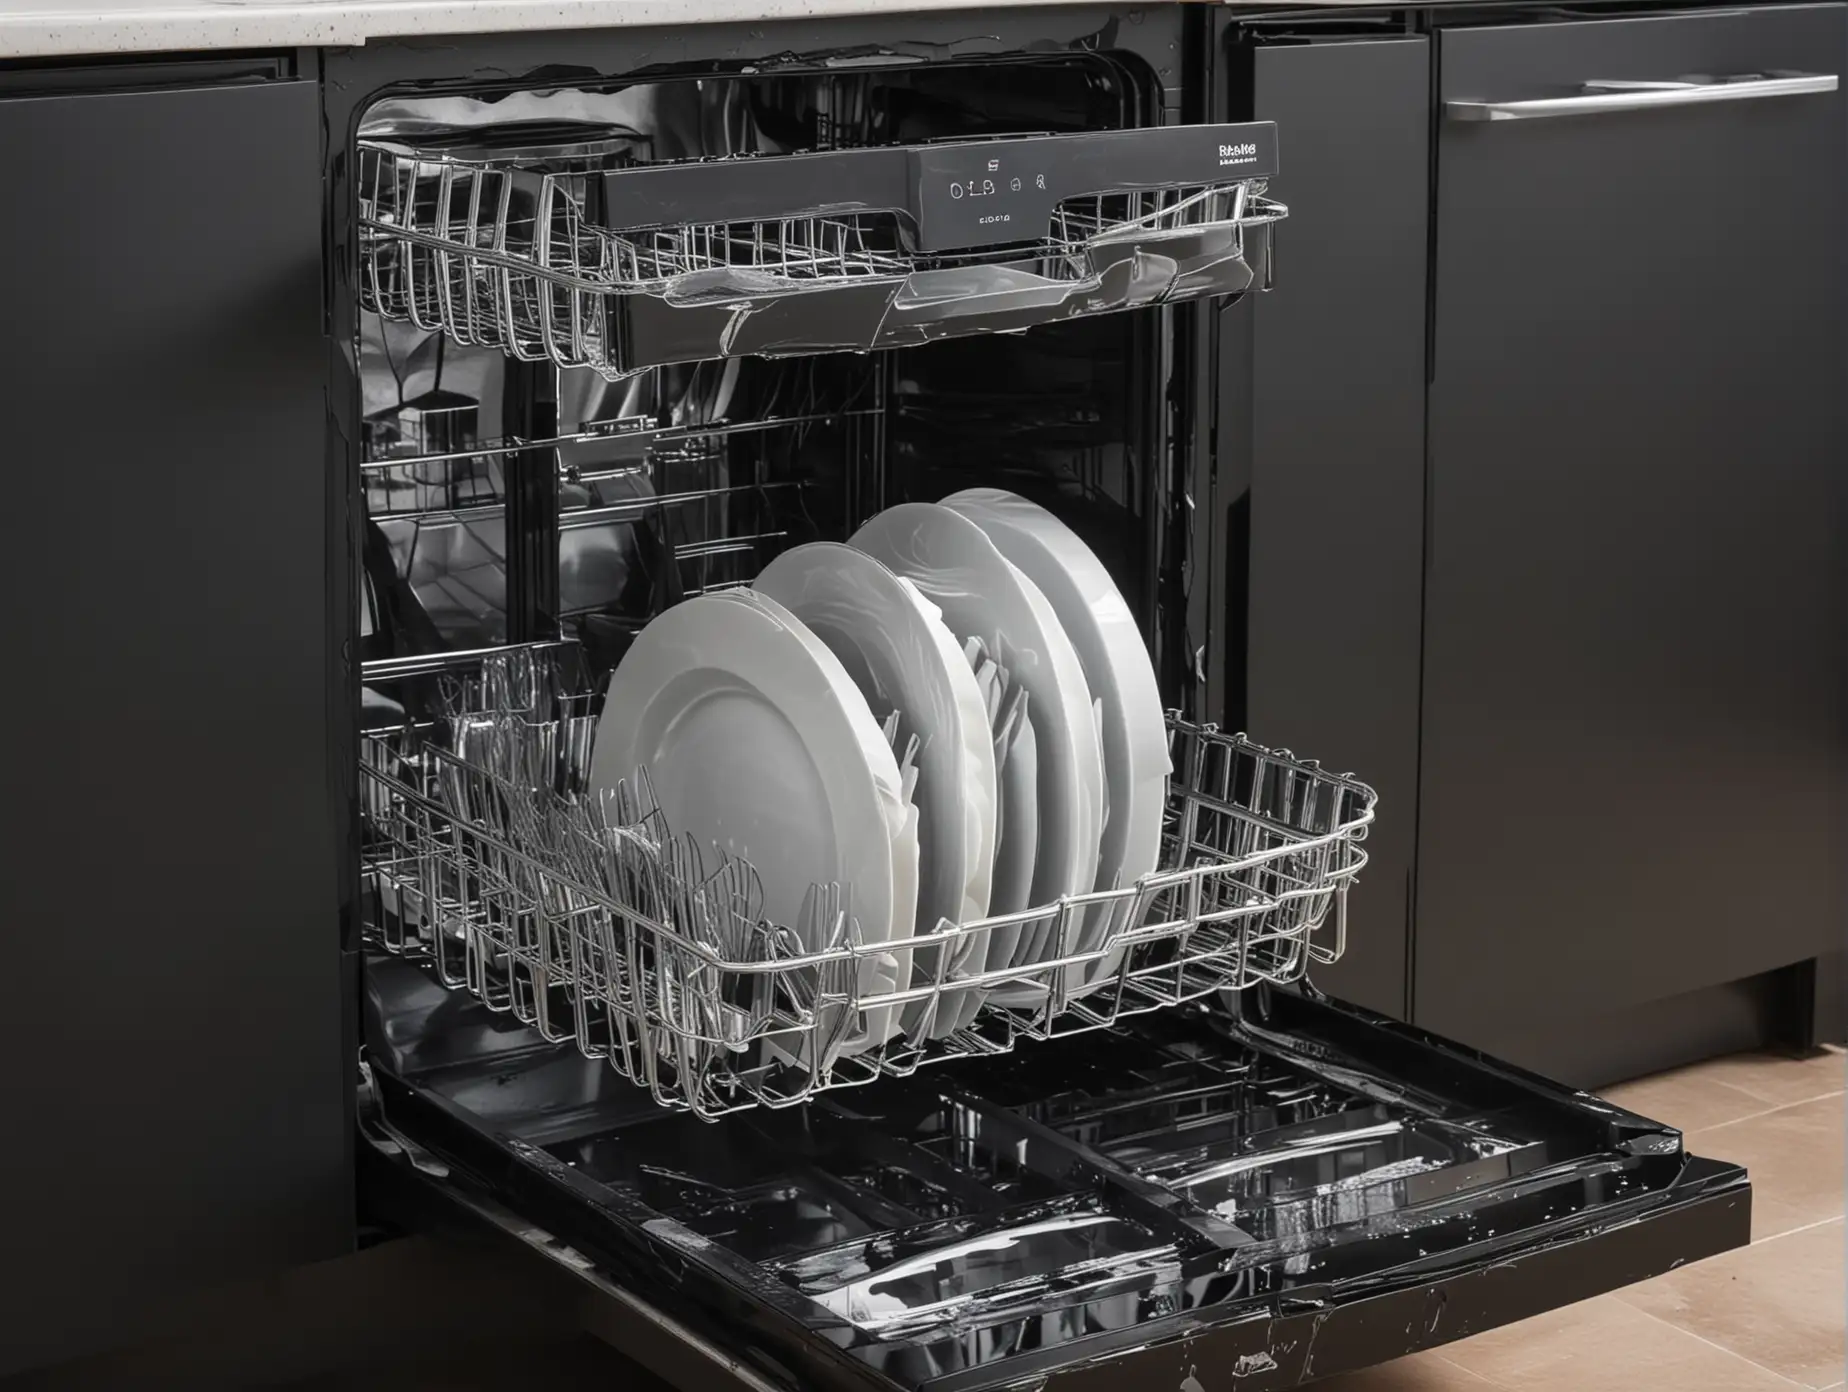 Broken-Black-Dishwasher-with-Visible-Damage